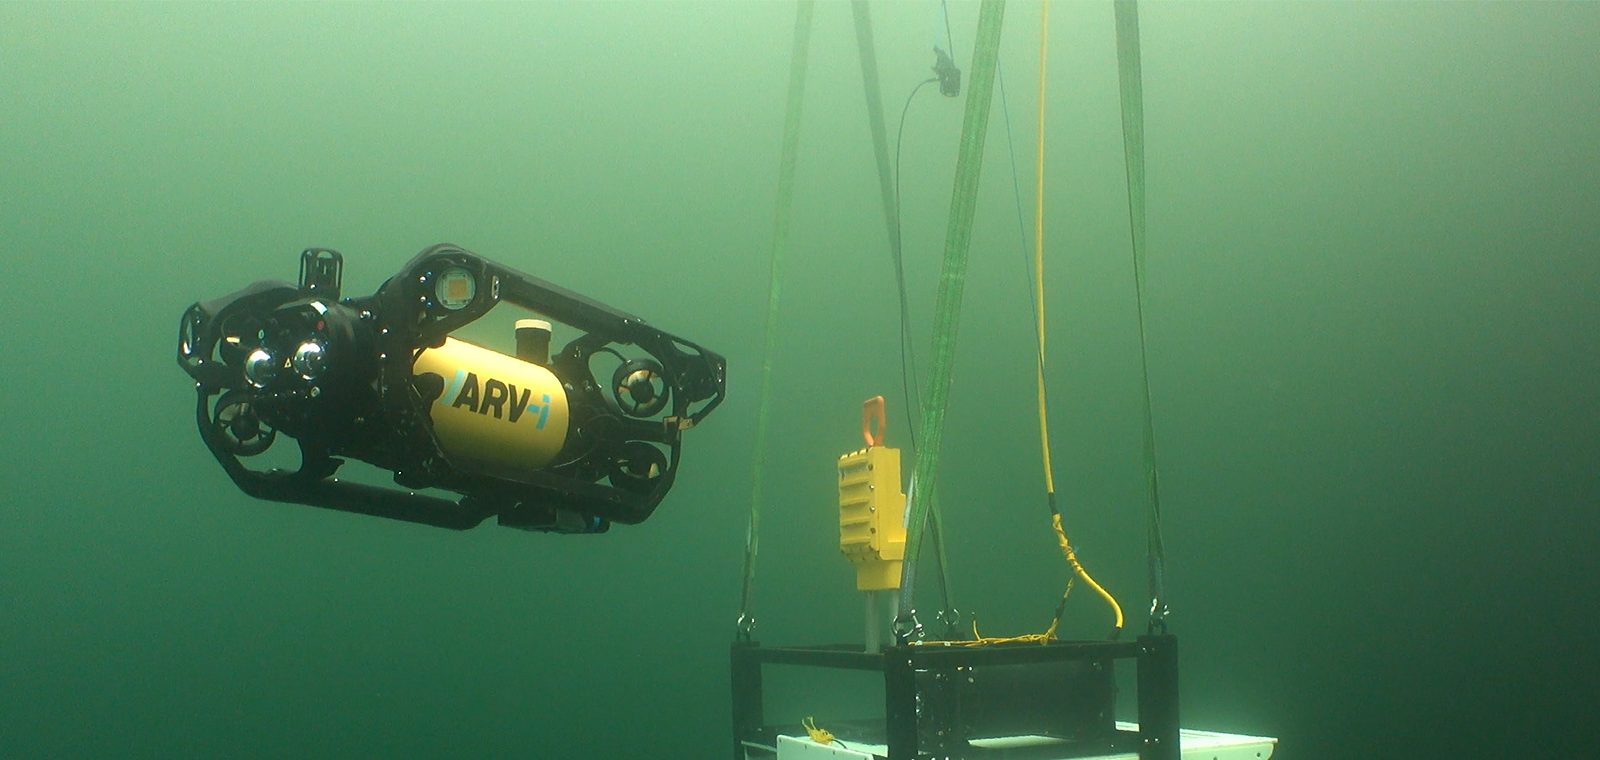 ARV-i resident autonomous vehicle inspecting submersed structure in autonomous mode